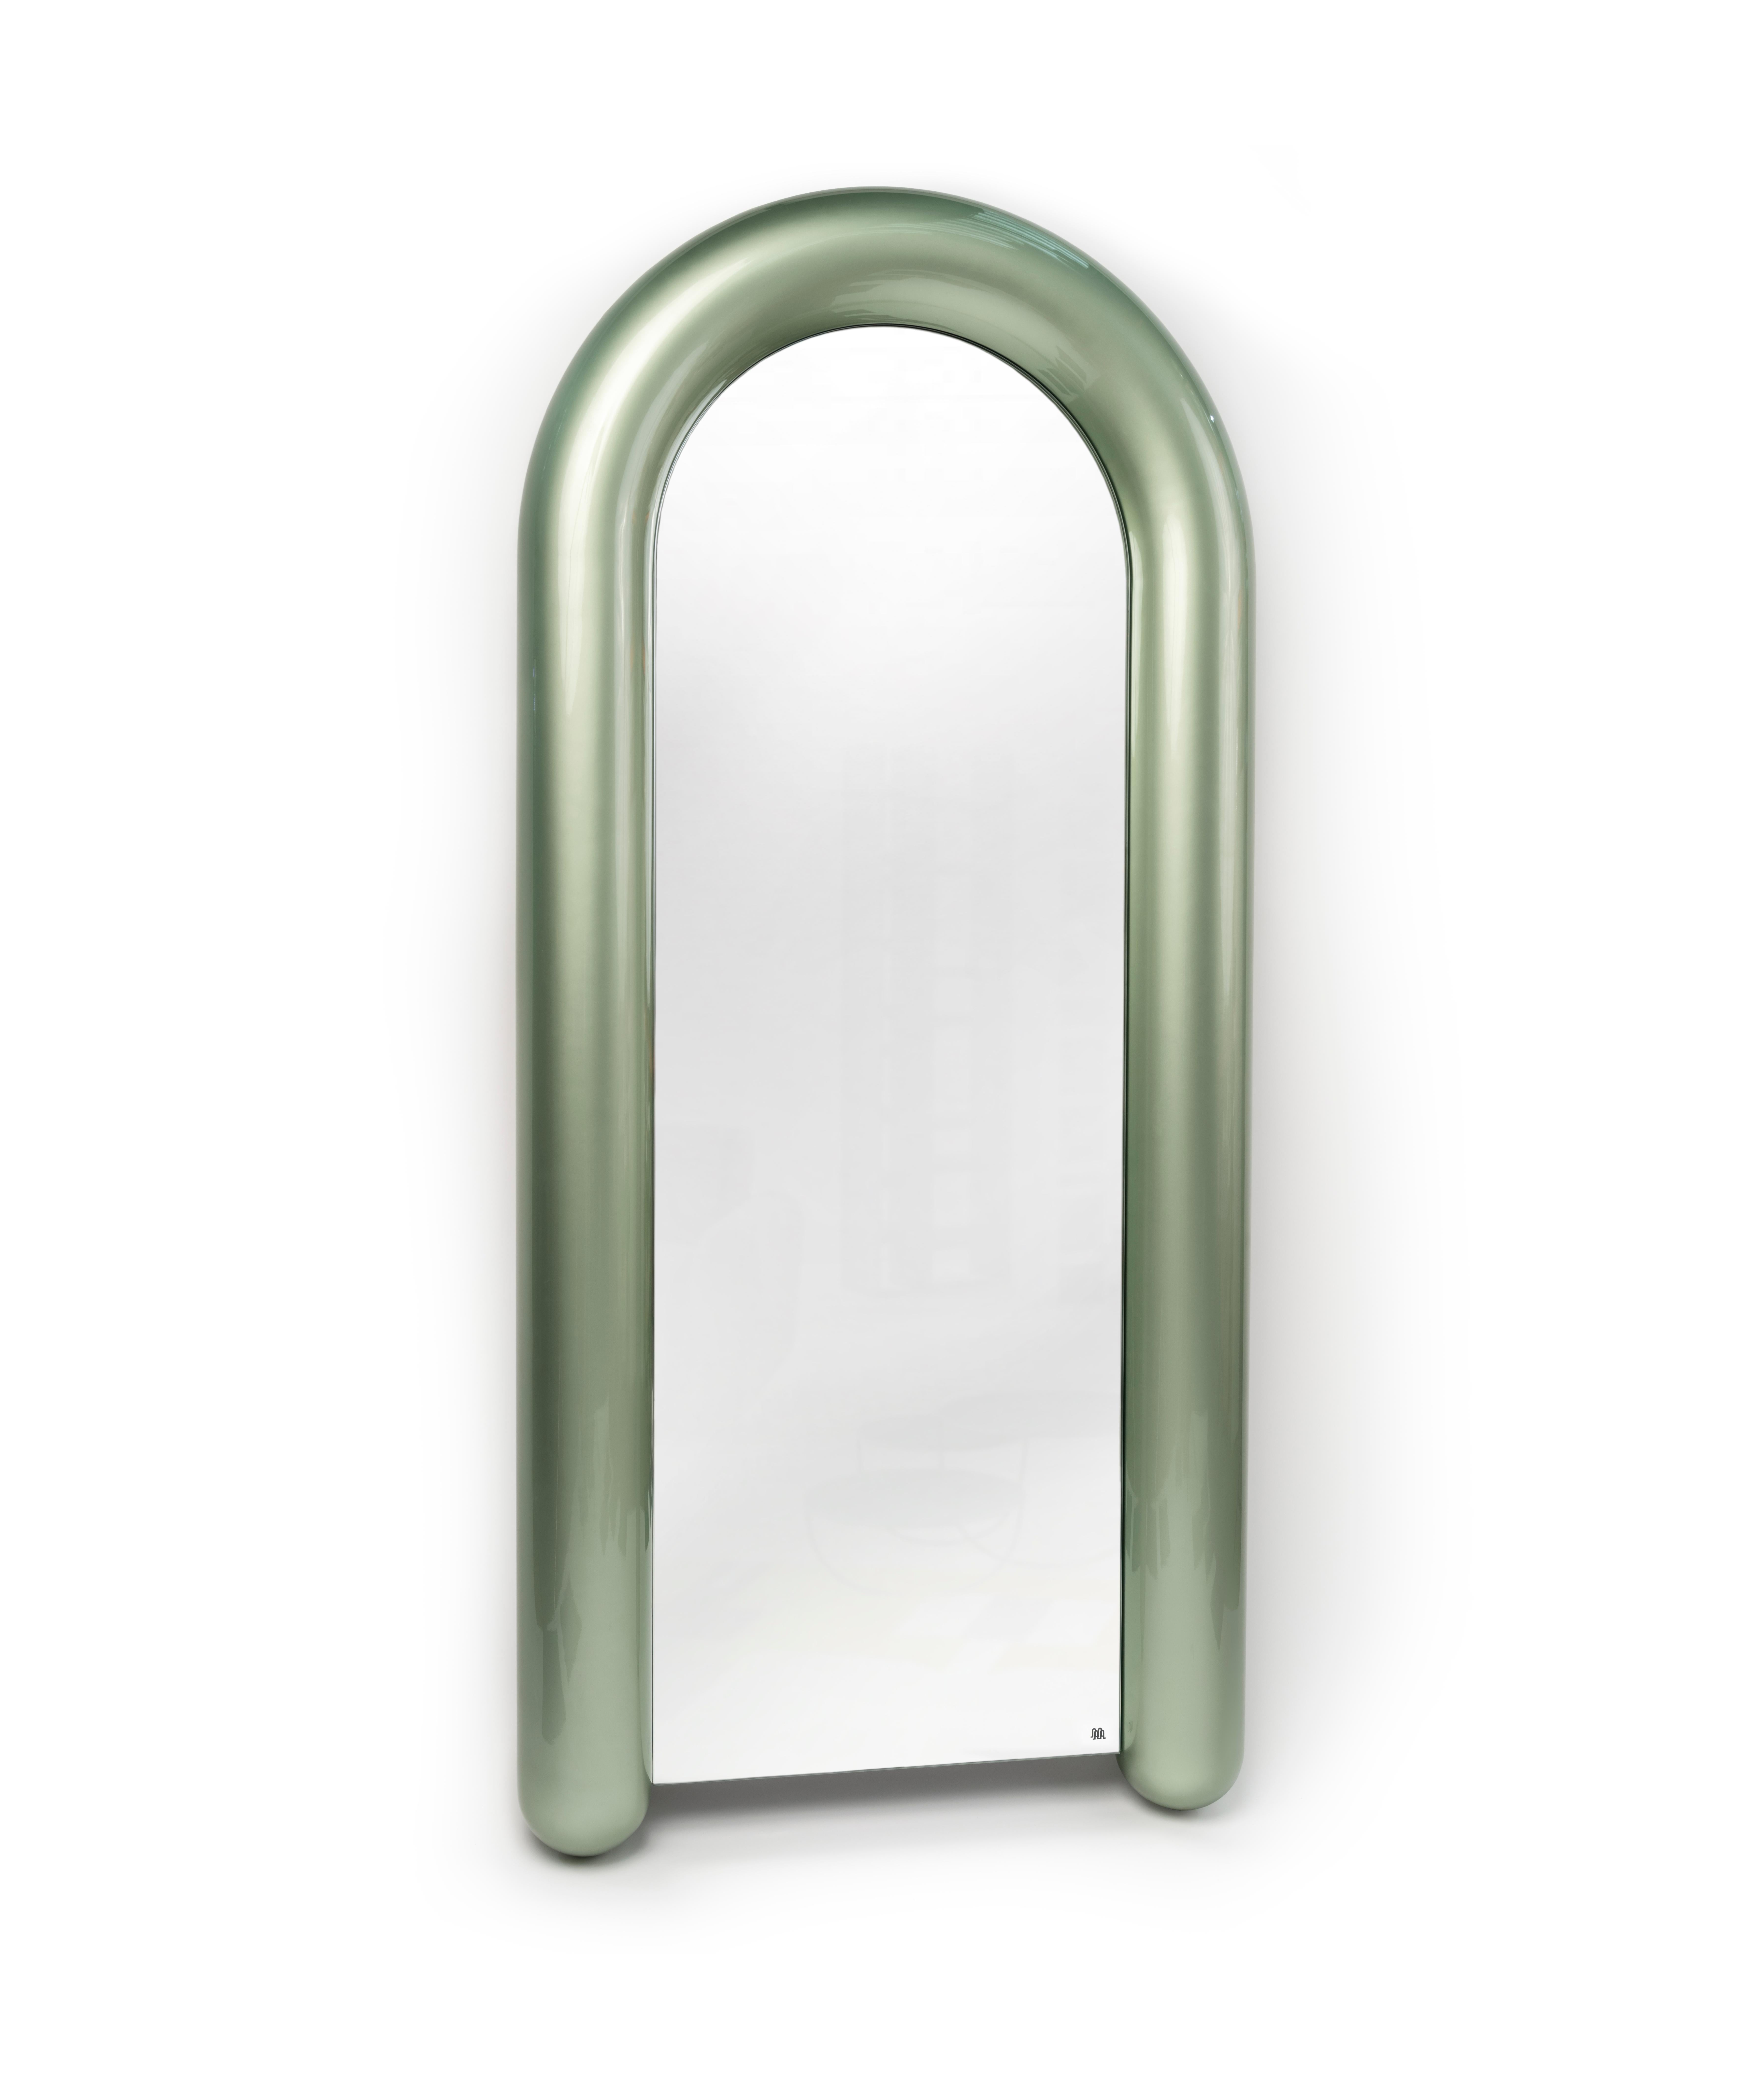 La Manufacture-Paris Soufflé Mirror Designed by Luca Nichetto In New Condition For Sale In New York, NY